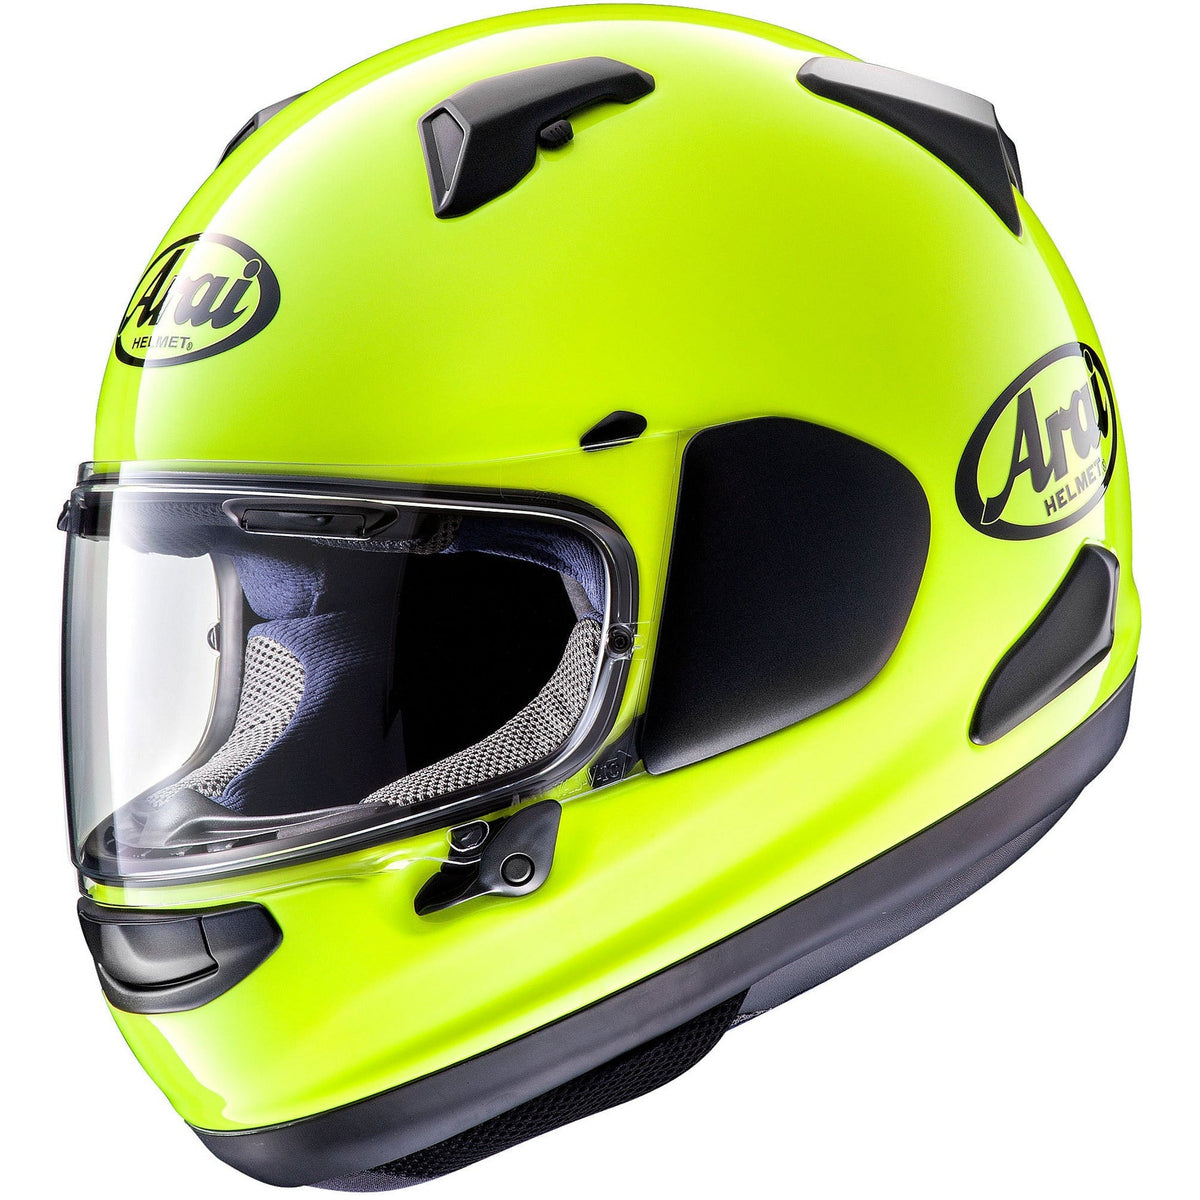 Quantum-X Helmet (Fluorescent Yellow)